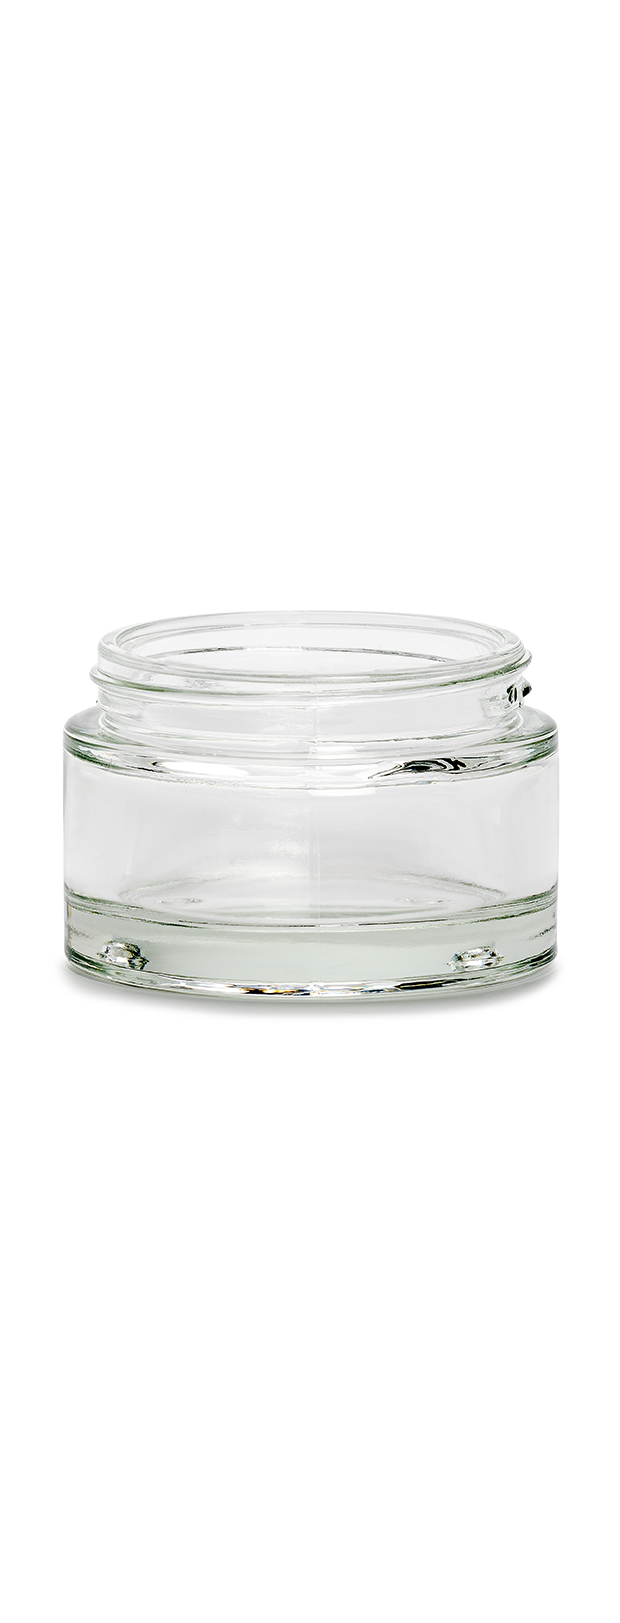 contenant en verre pot canopee(ou refill) 50ml gcmi 58 400 verre recycle transp